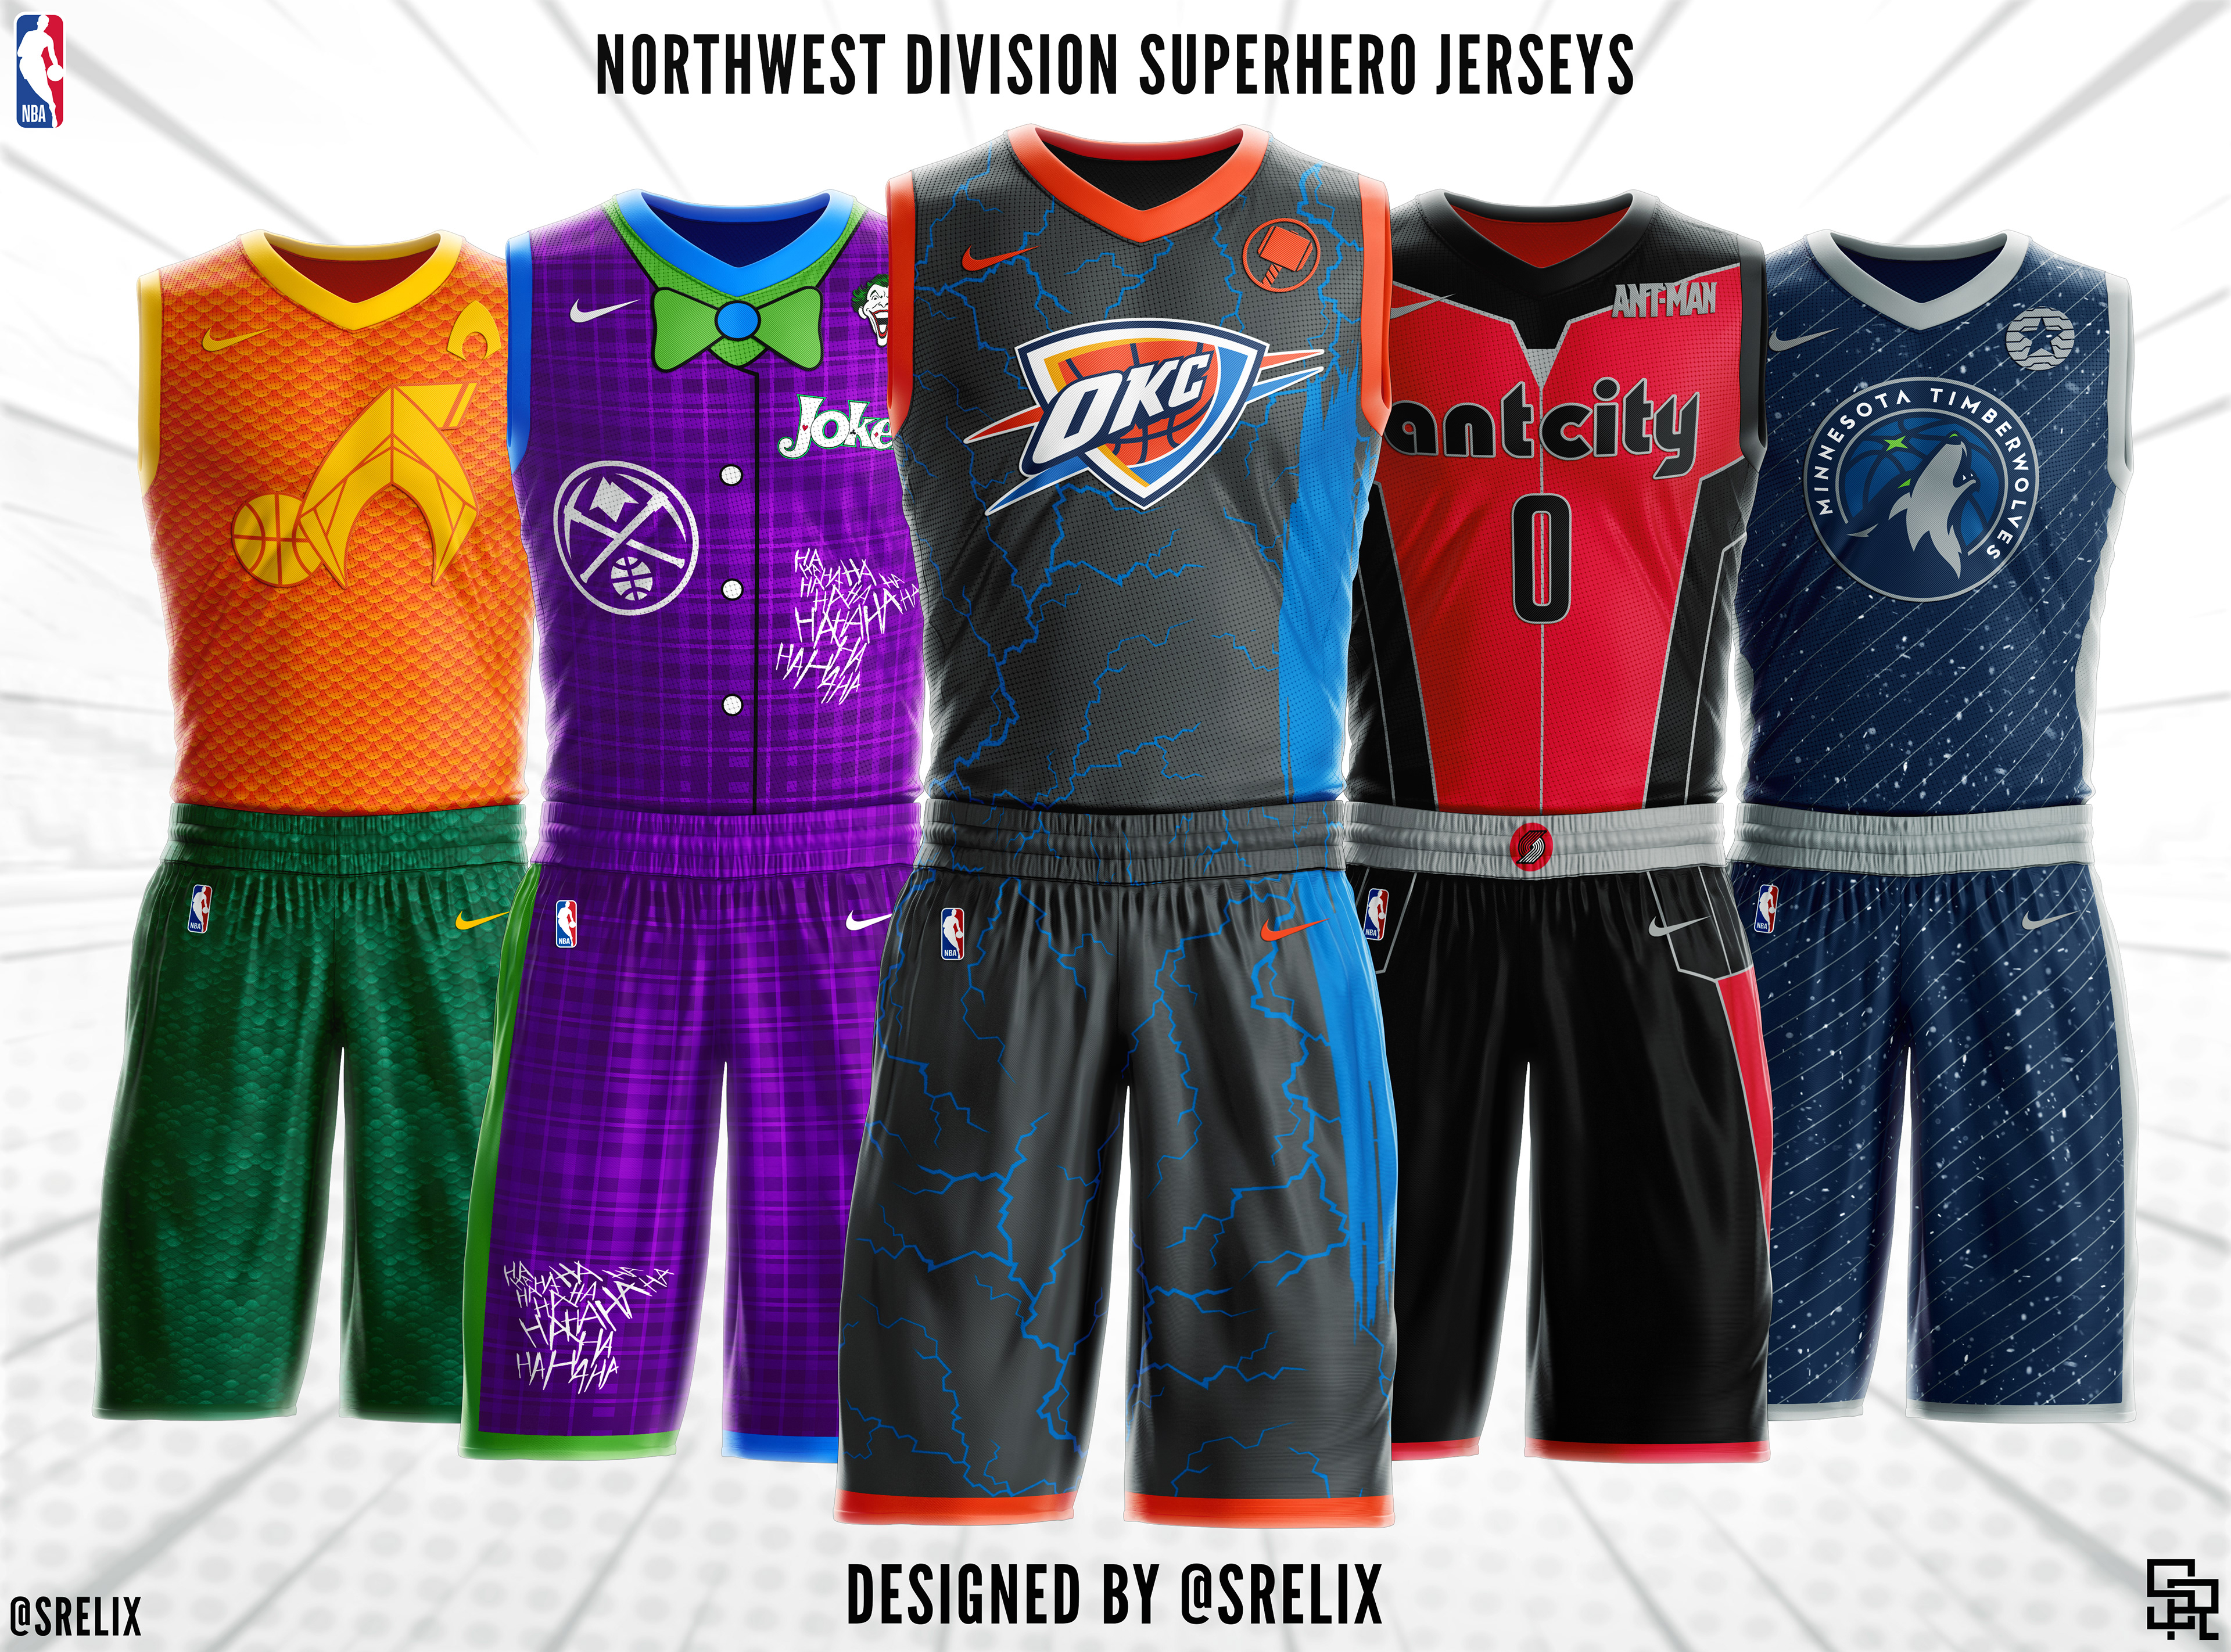 NBA graphic designer back with new Disney/NBA crossover jerseys